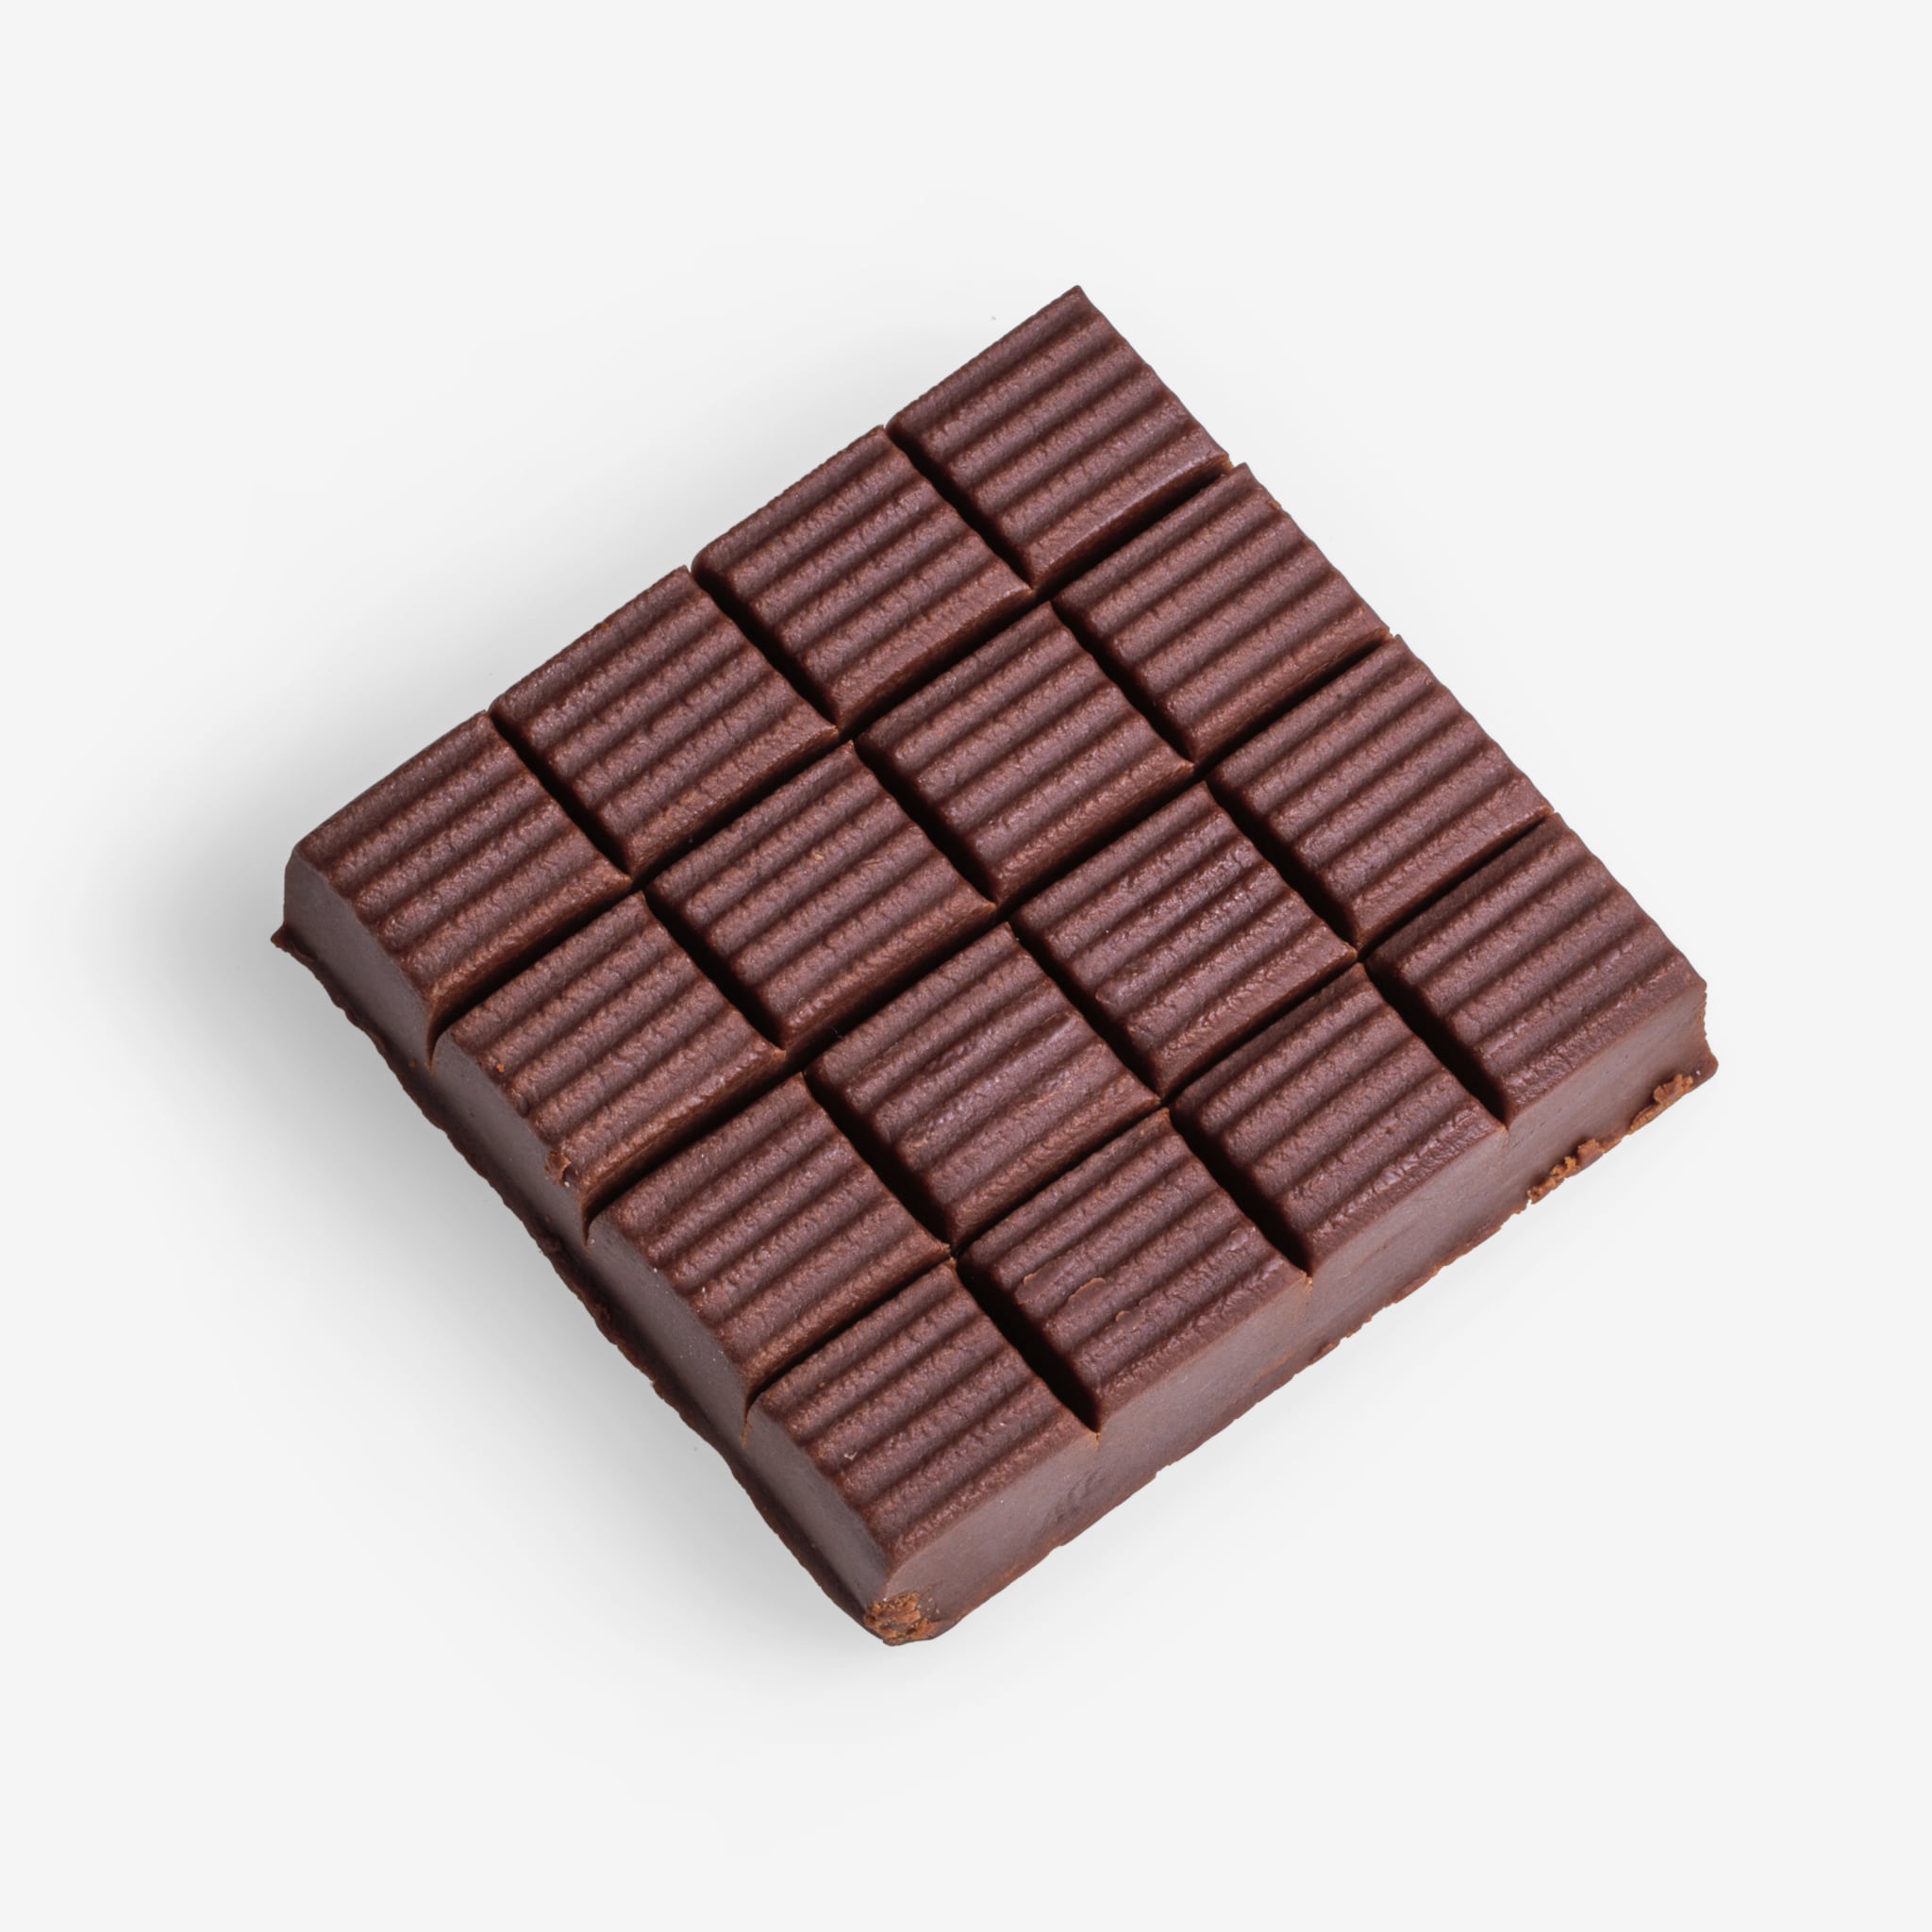 Chocolate PSD layered image